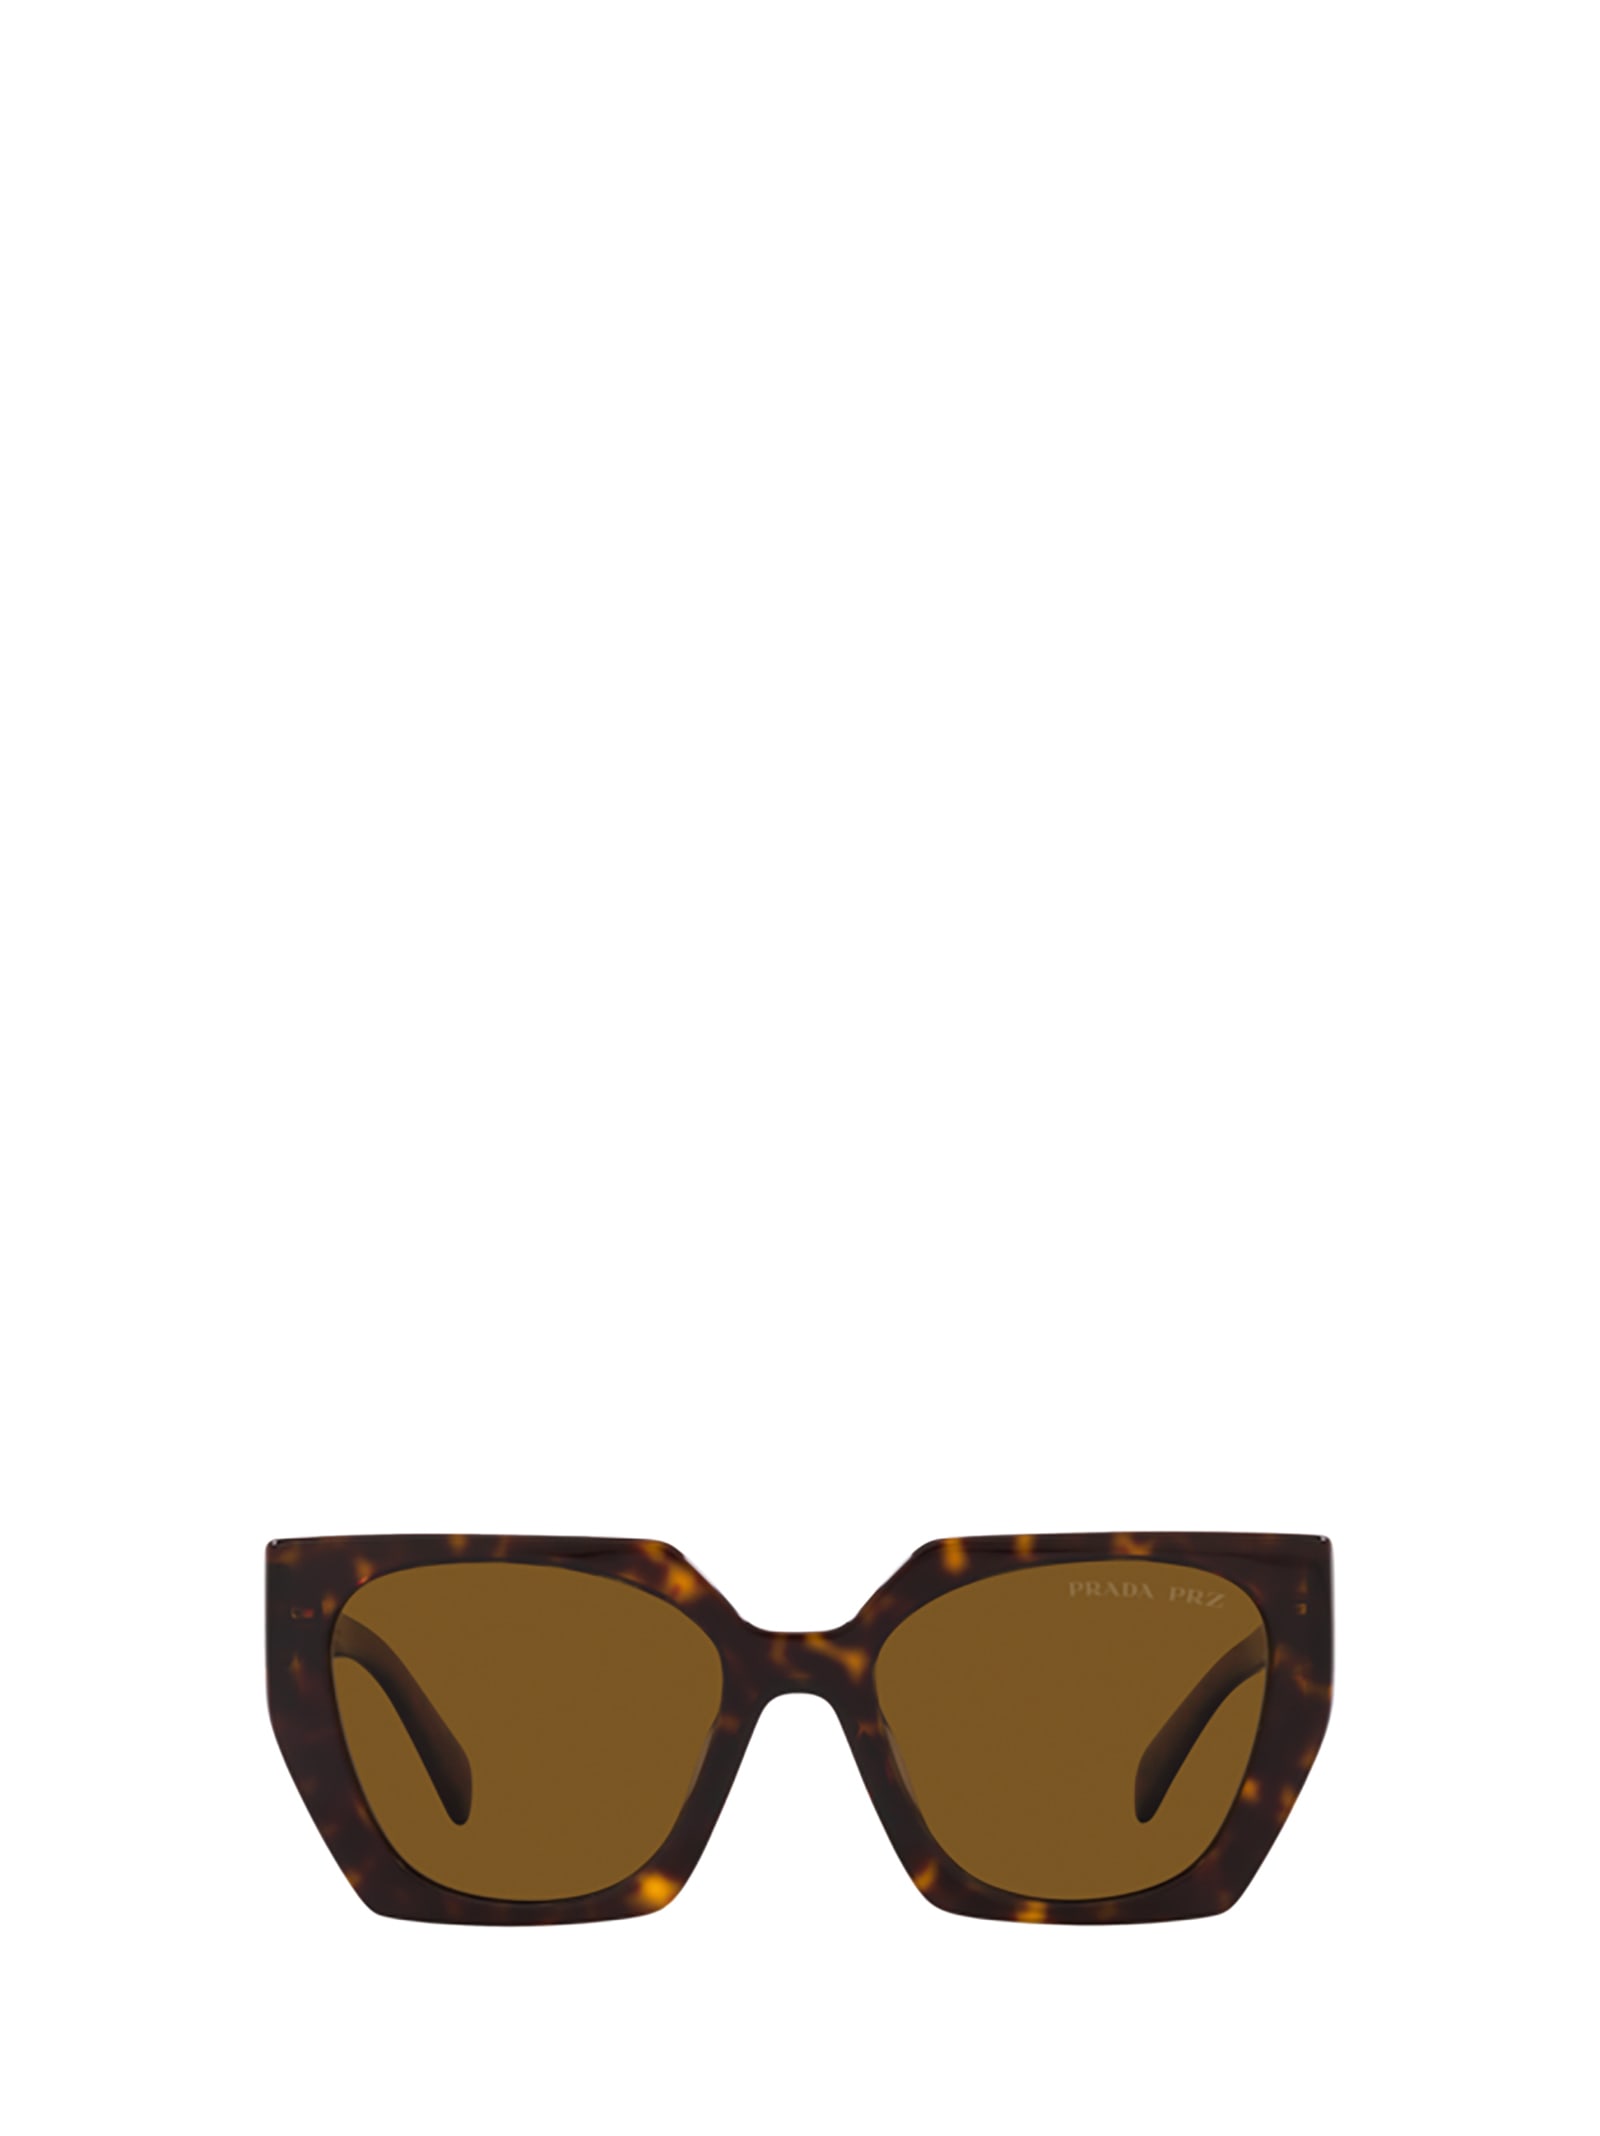 Prada Eyewear Pr 15ws Tortoise Sunglasses